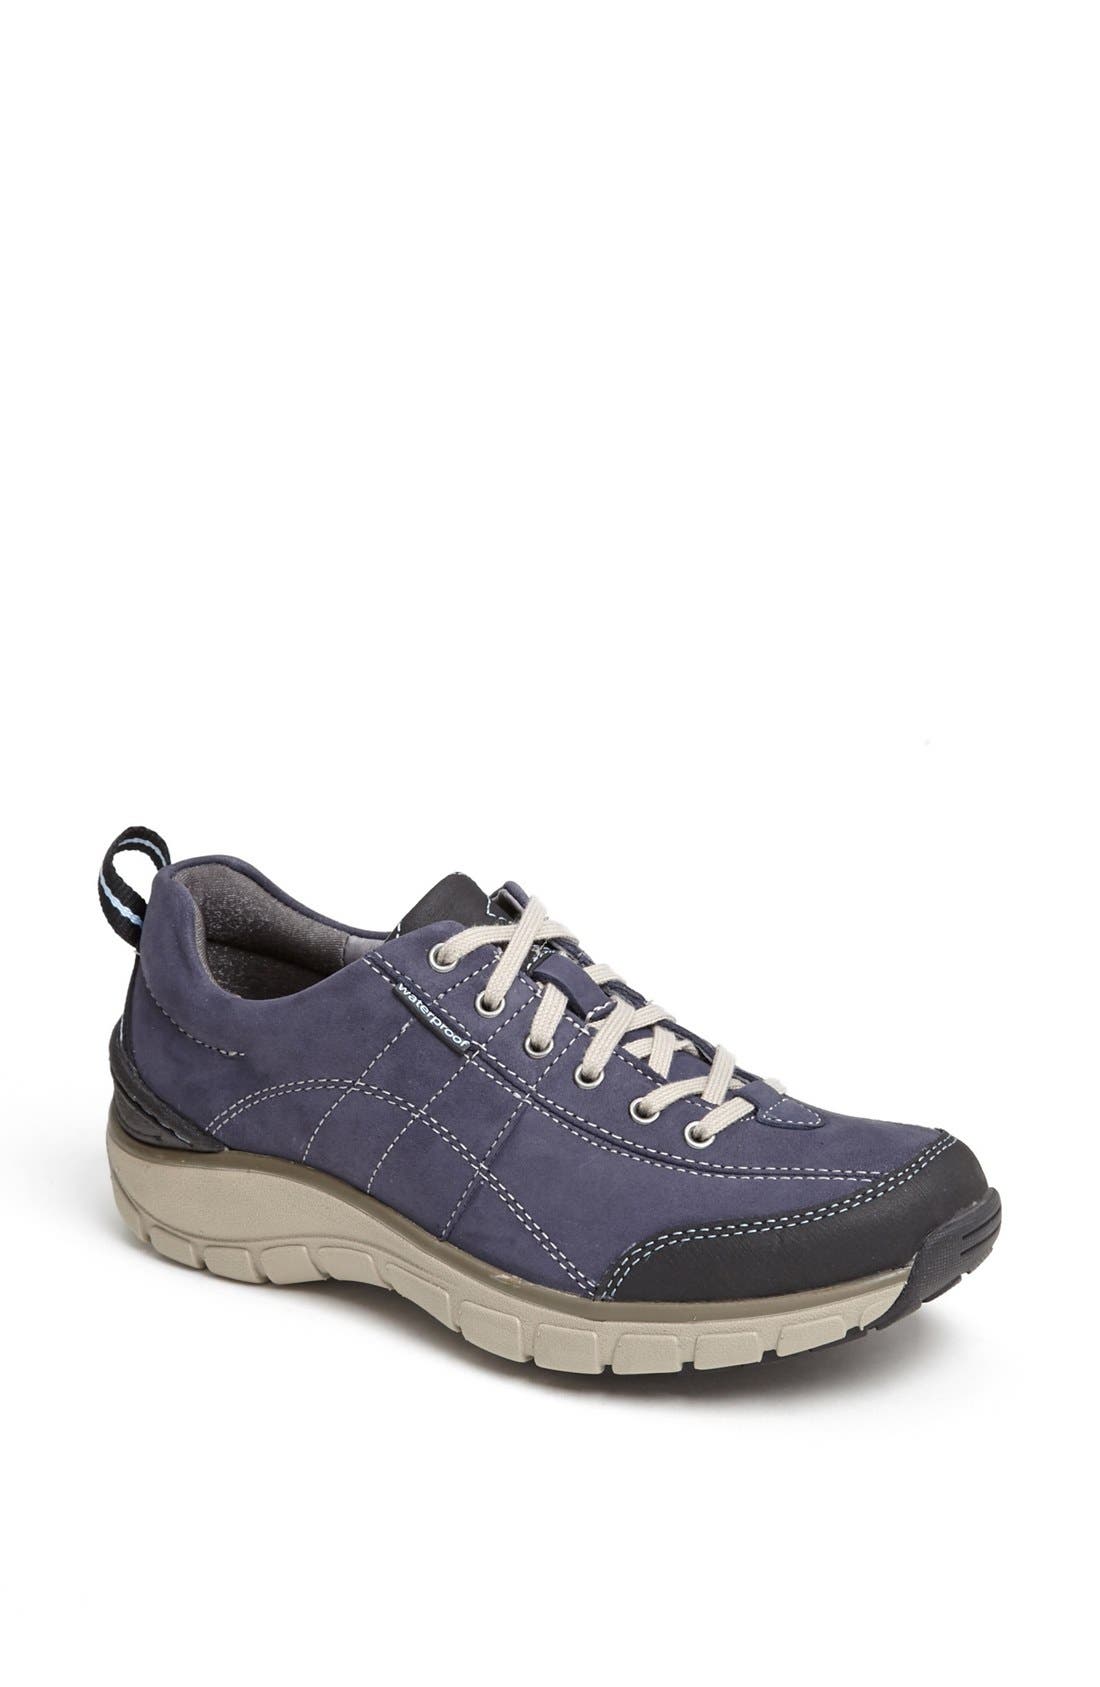 UPC 046734591186 - Clarks 'Wave Trek' Waterproof Sneaker Navy Size 8 M ...